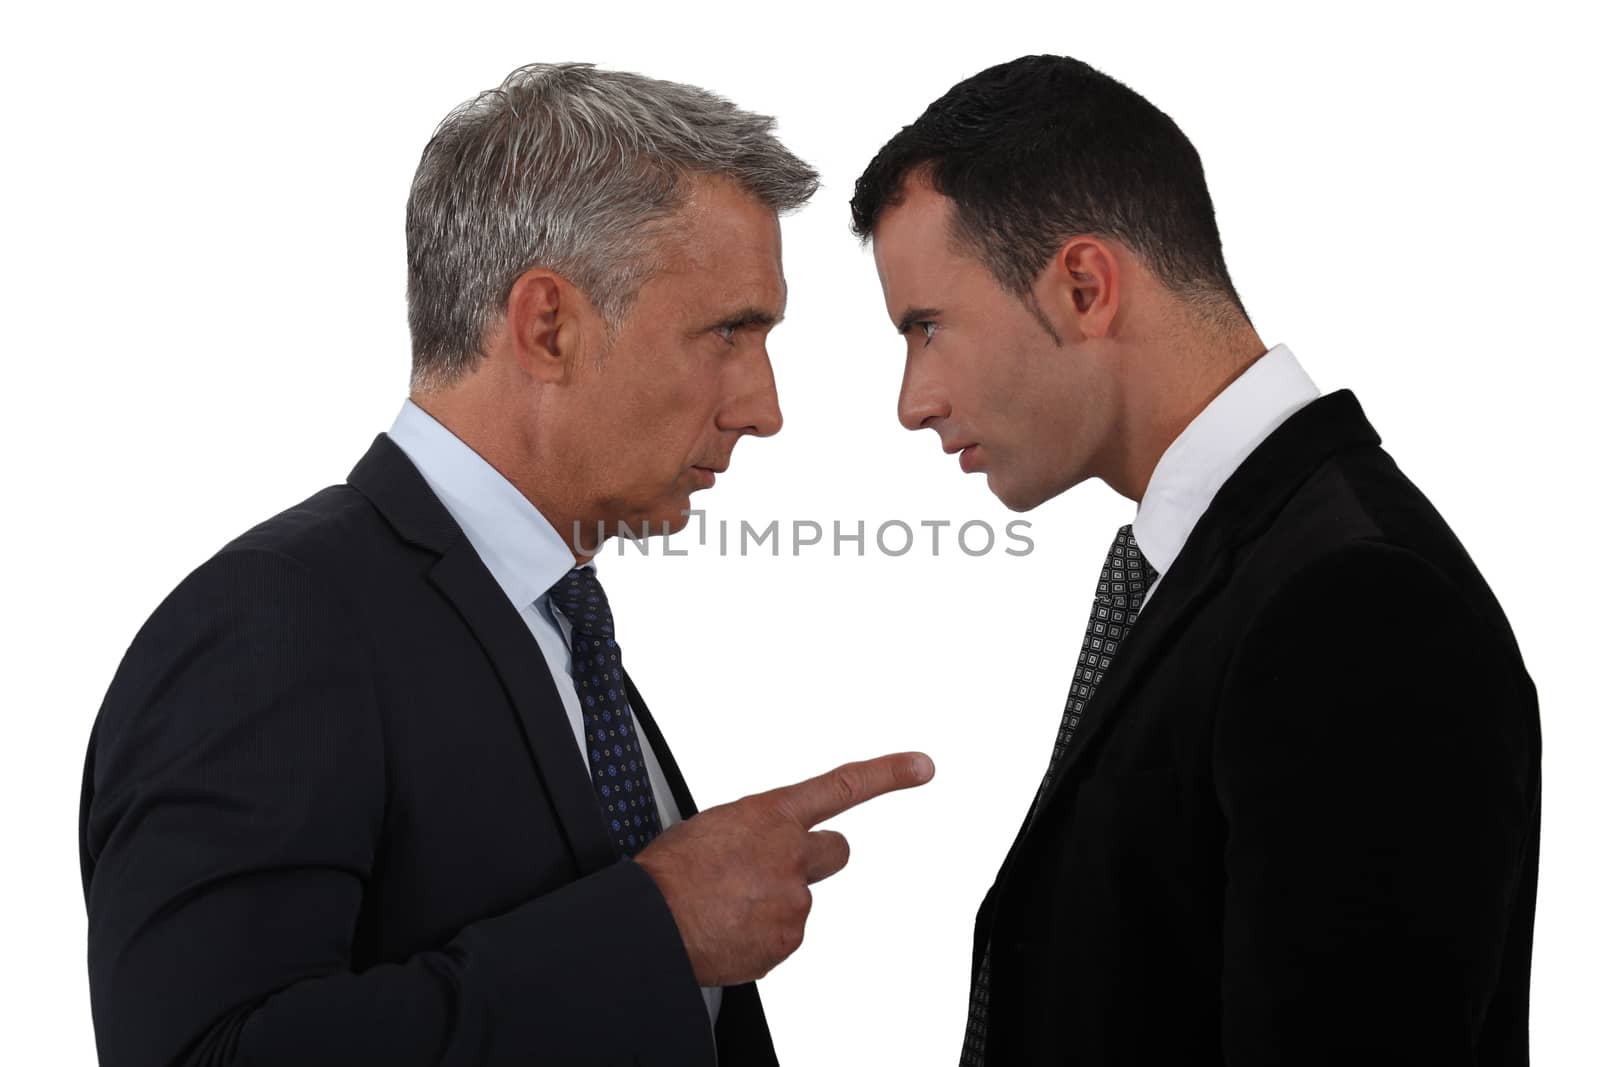 Men arguing by phovoir